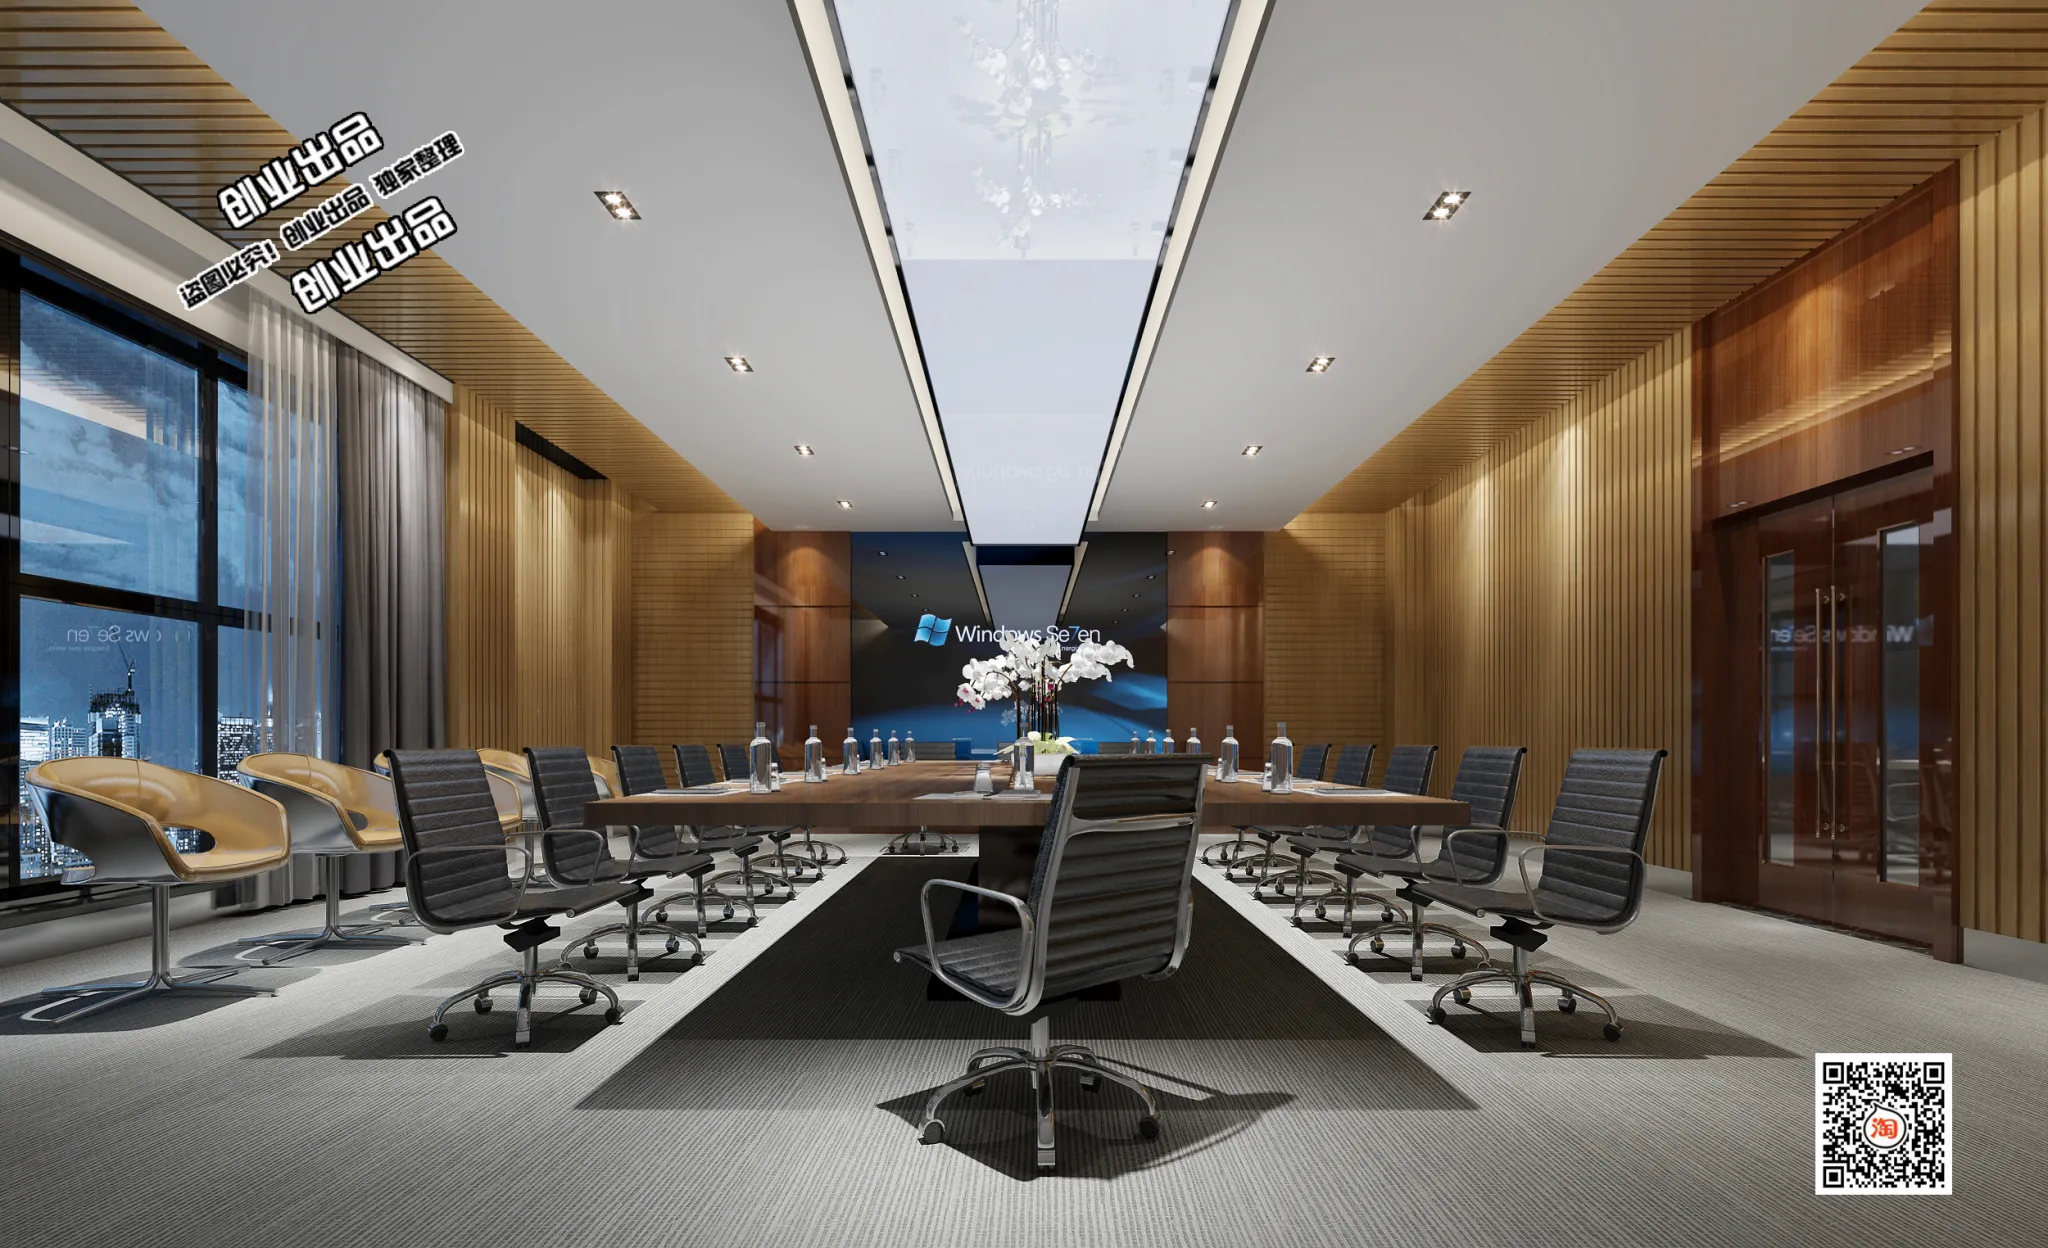 3D OFFICE INTERIOR (VRAY) – MEETING ROOM 3D SCENES – 016